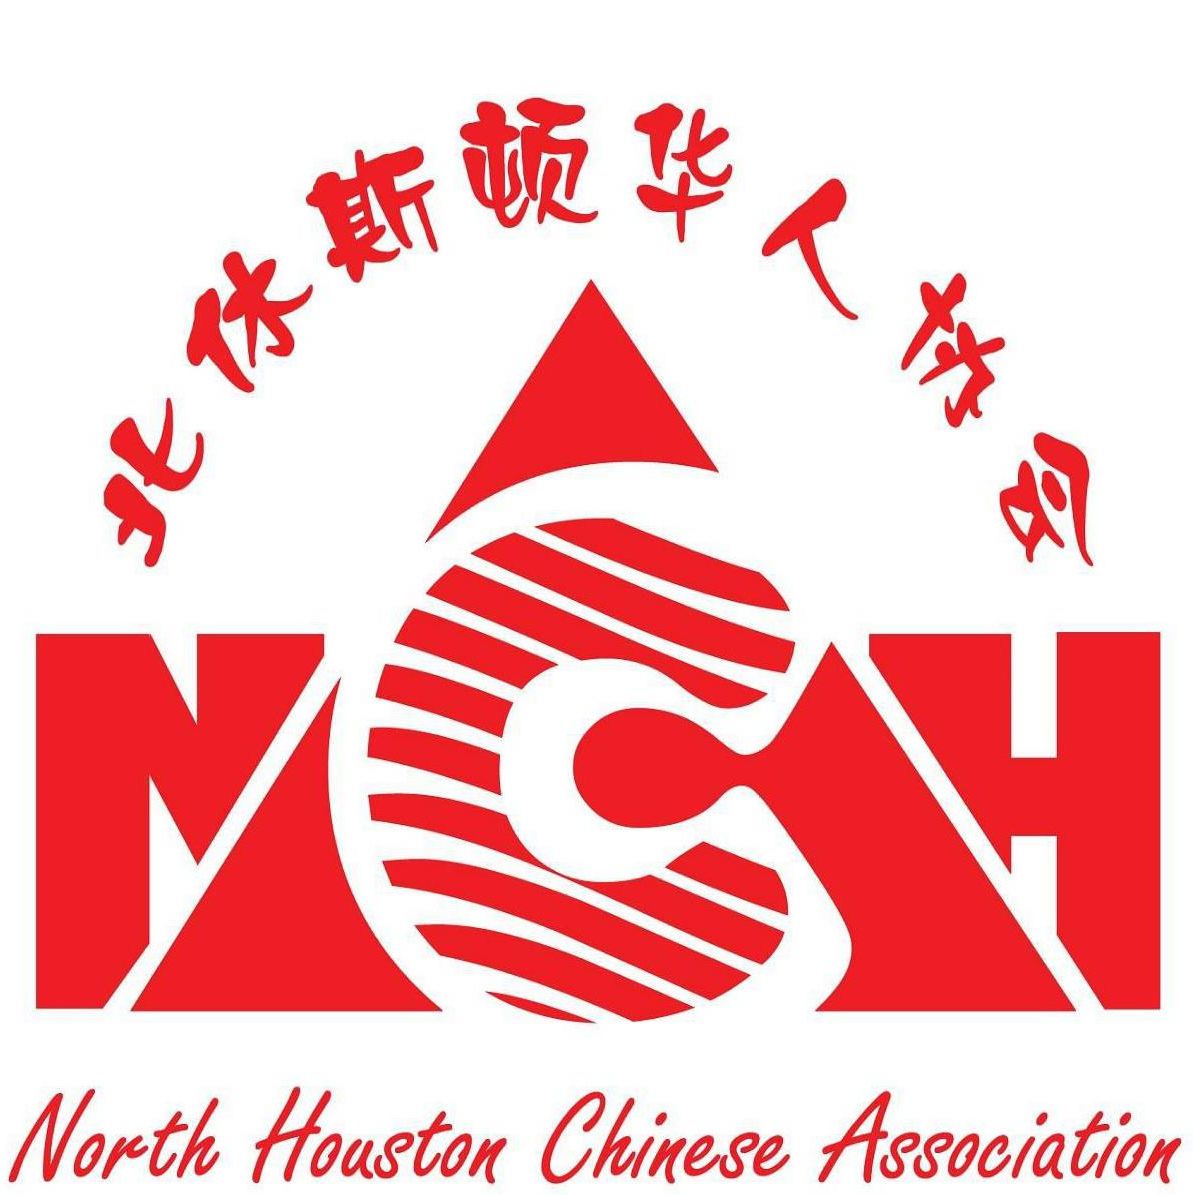 Mandarin Speaking Organization in Dallas Texas - North Houston Chinese Association